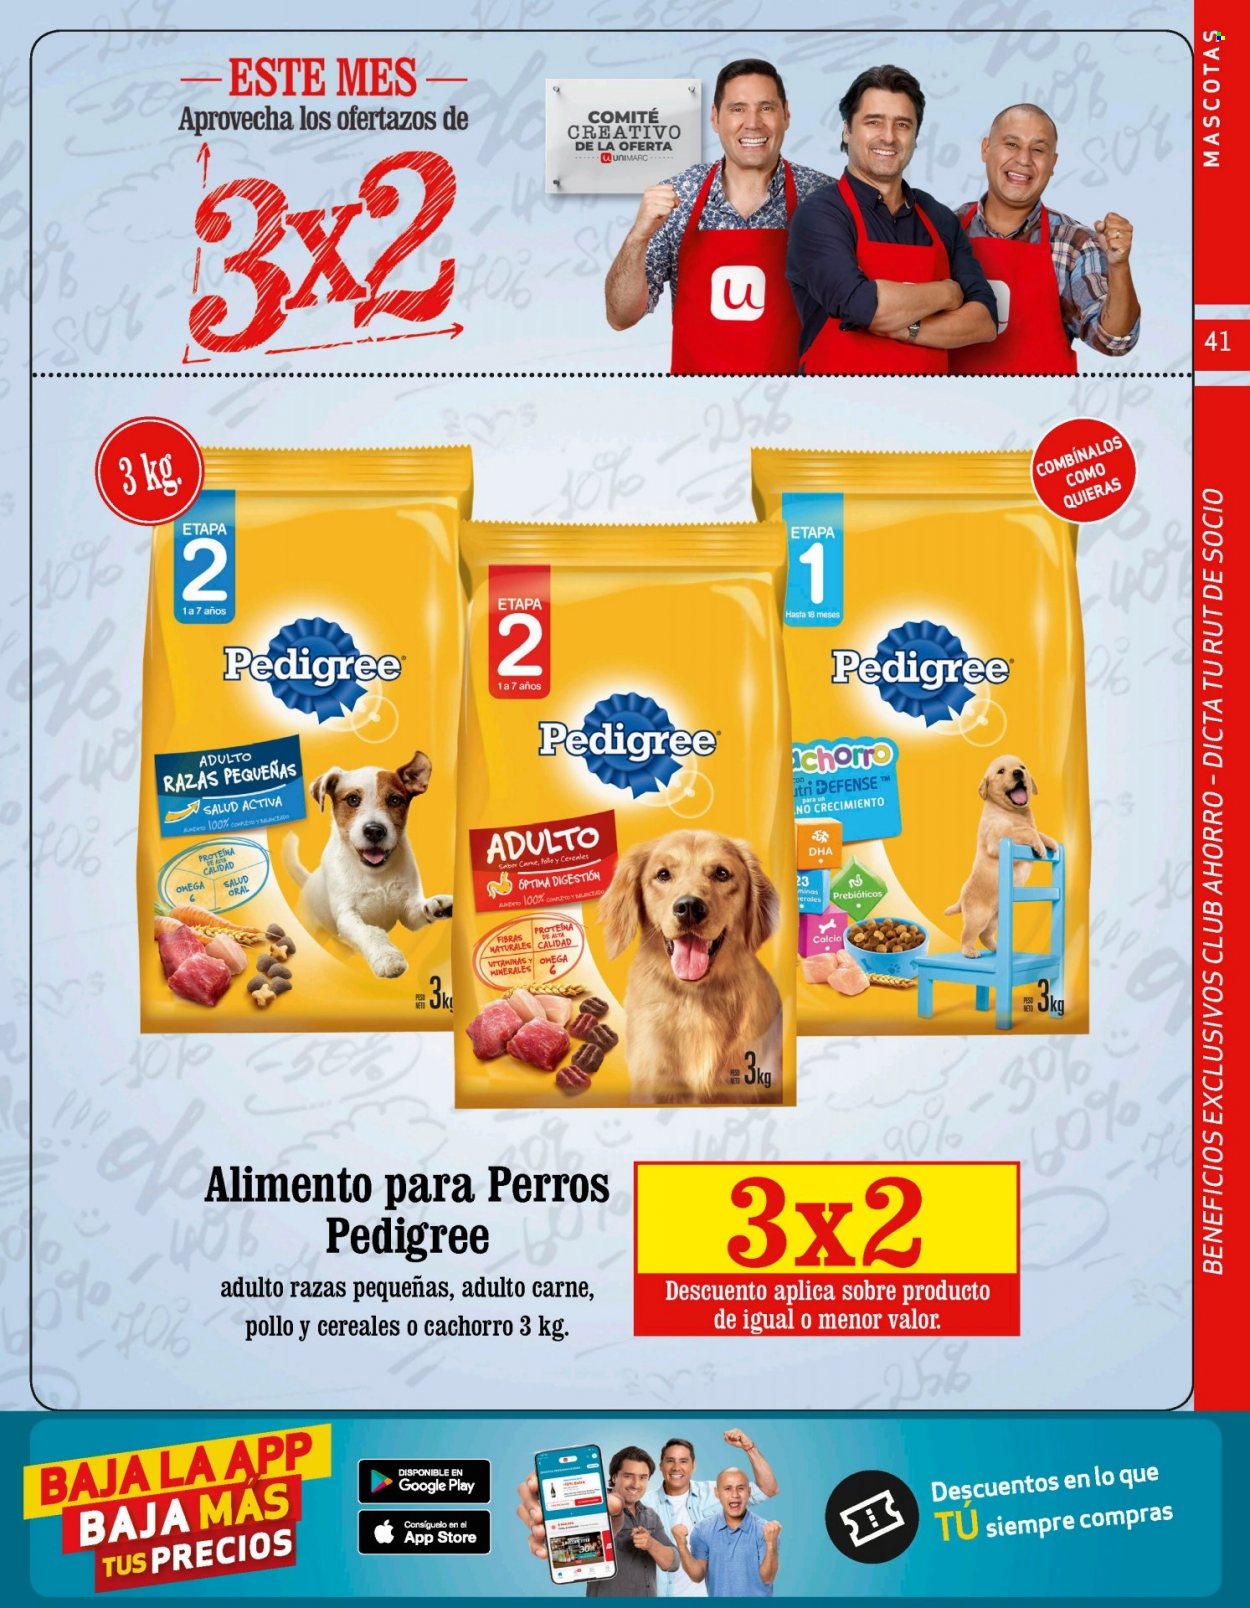 thumbnail - Catálogo Unimarc - 15.06.2022 - 12.07.2022 - Ventas - Pedigree, alimento para perros, alimentos para mascota, Calcio. Página 41.